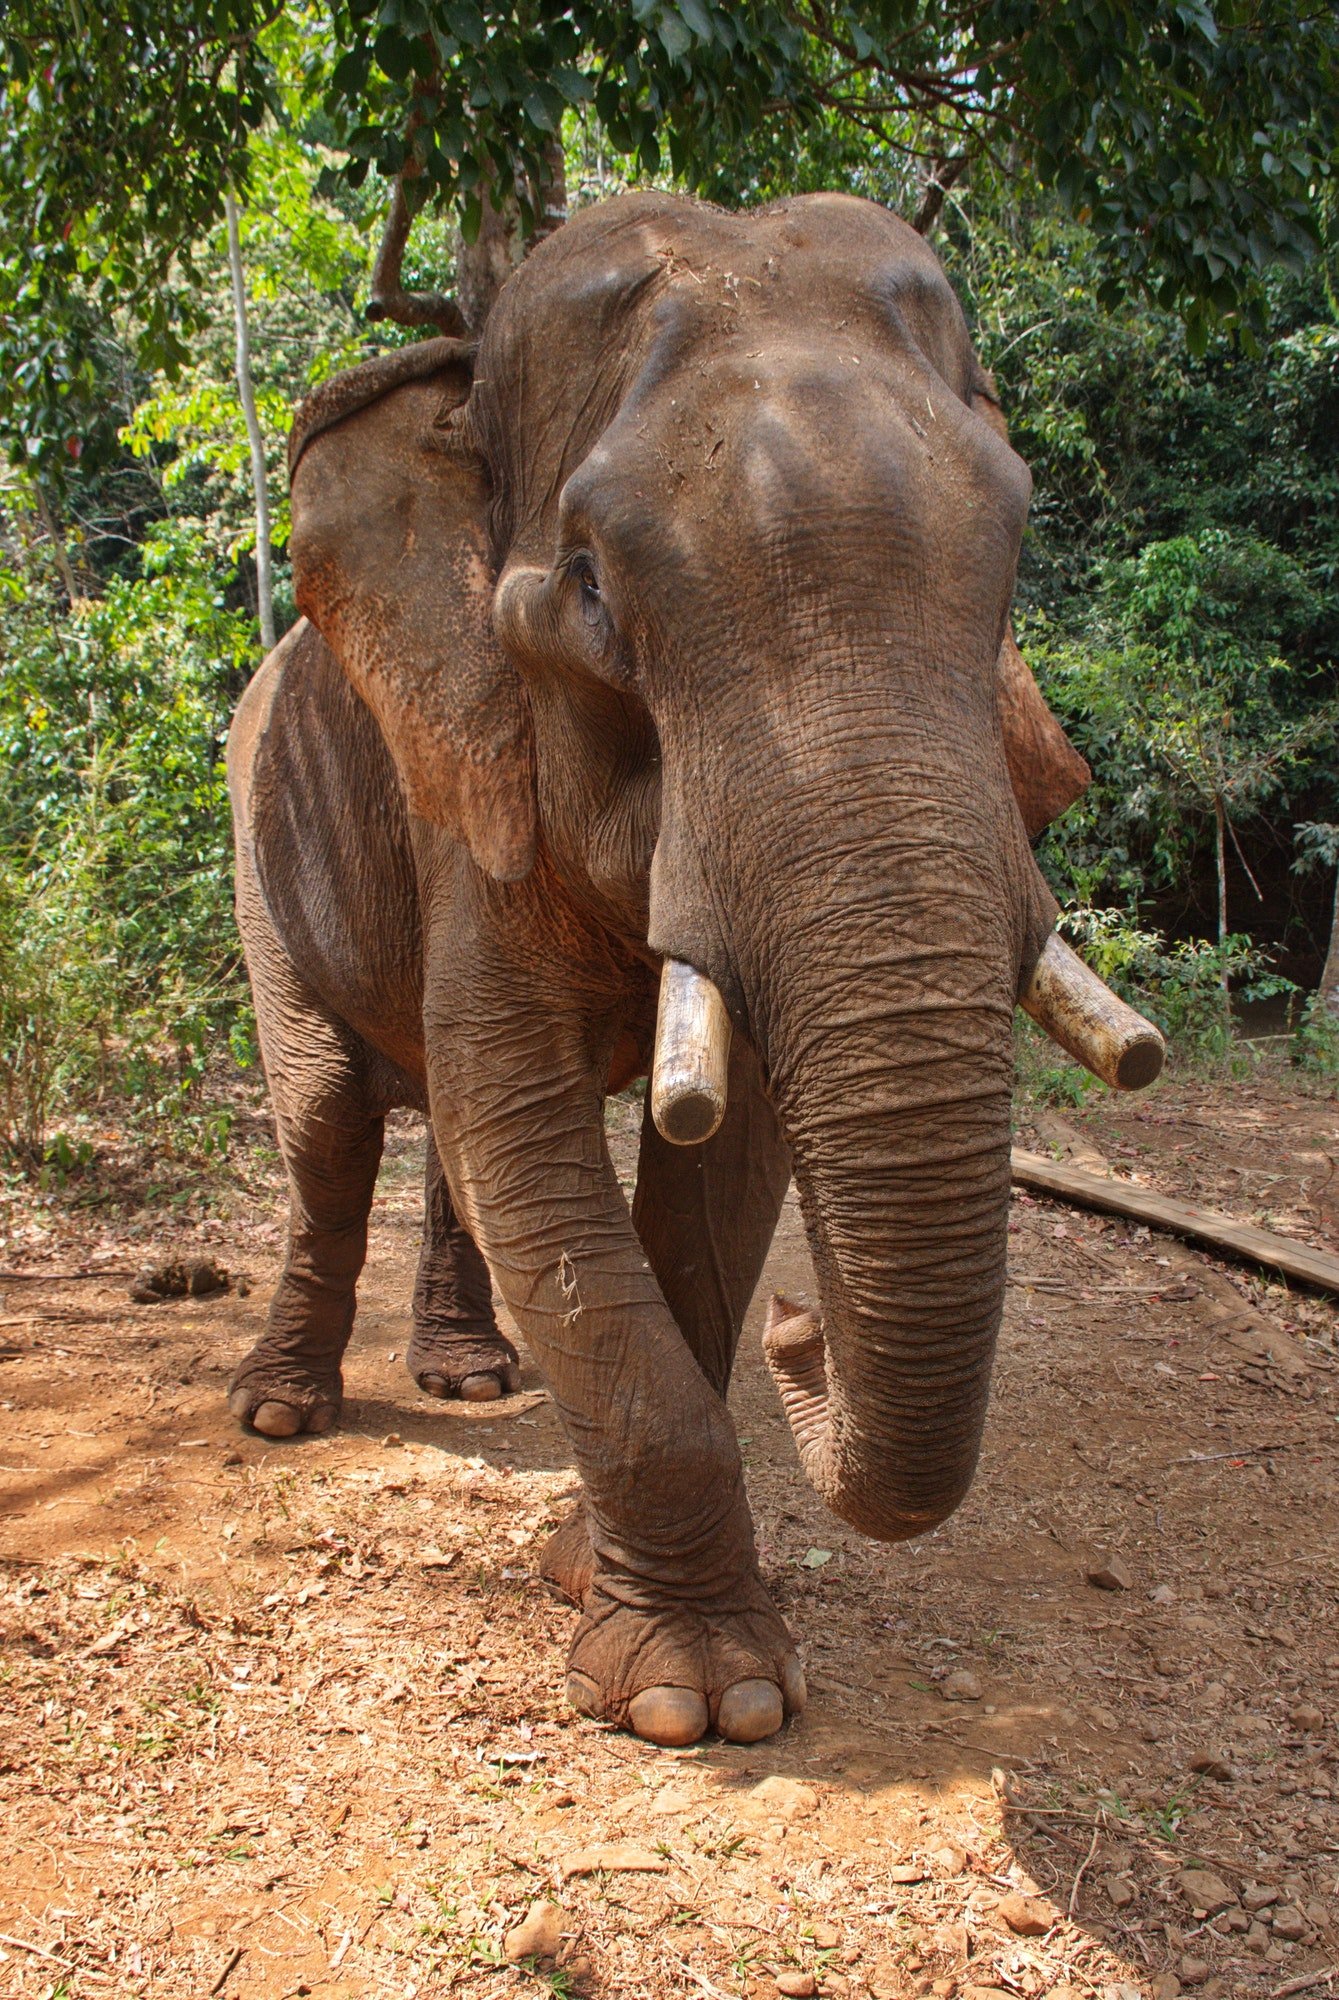 Meeting elephants in Cambodia